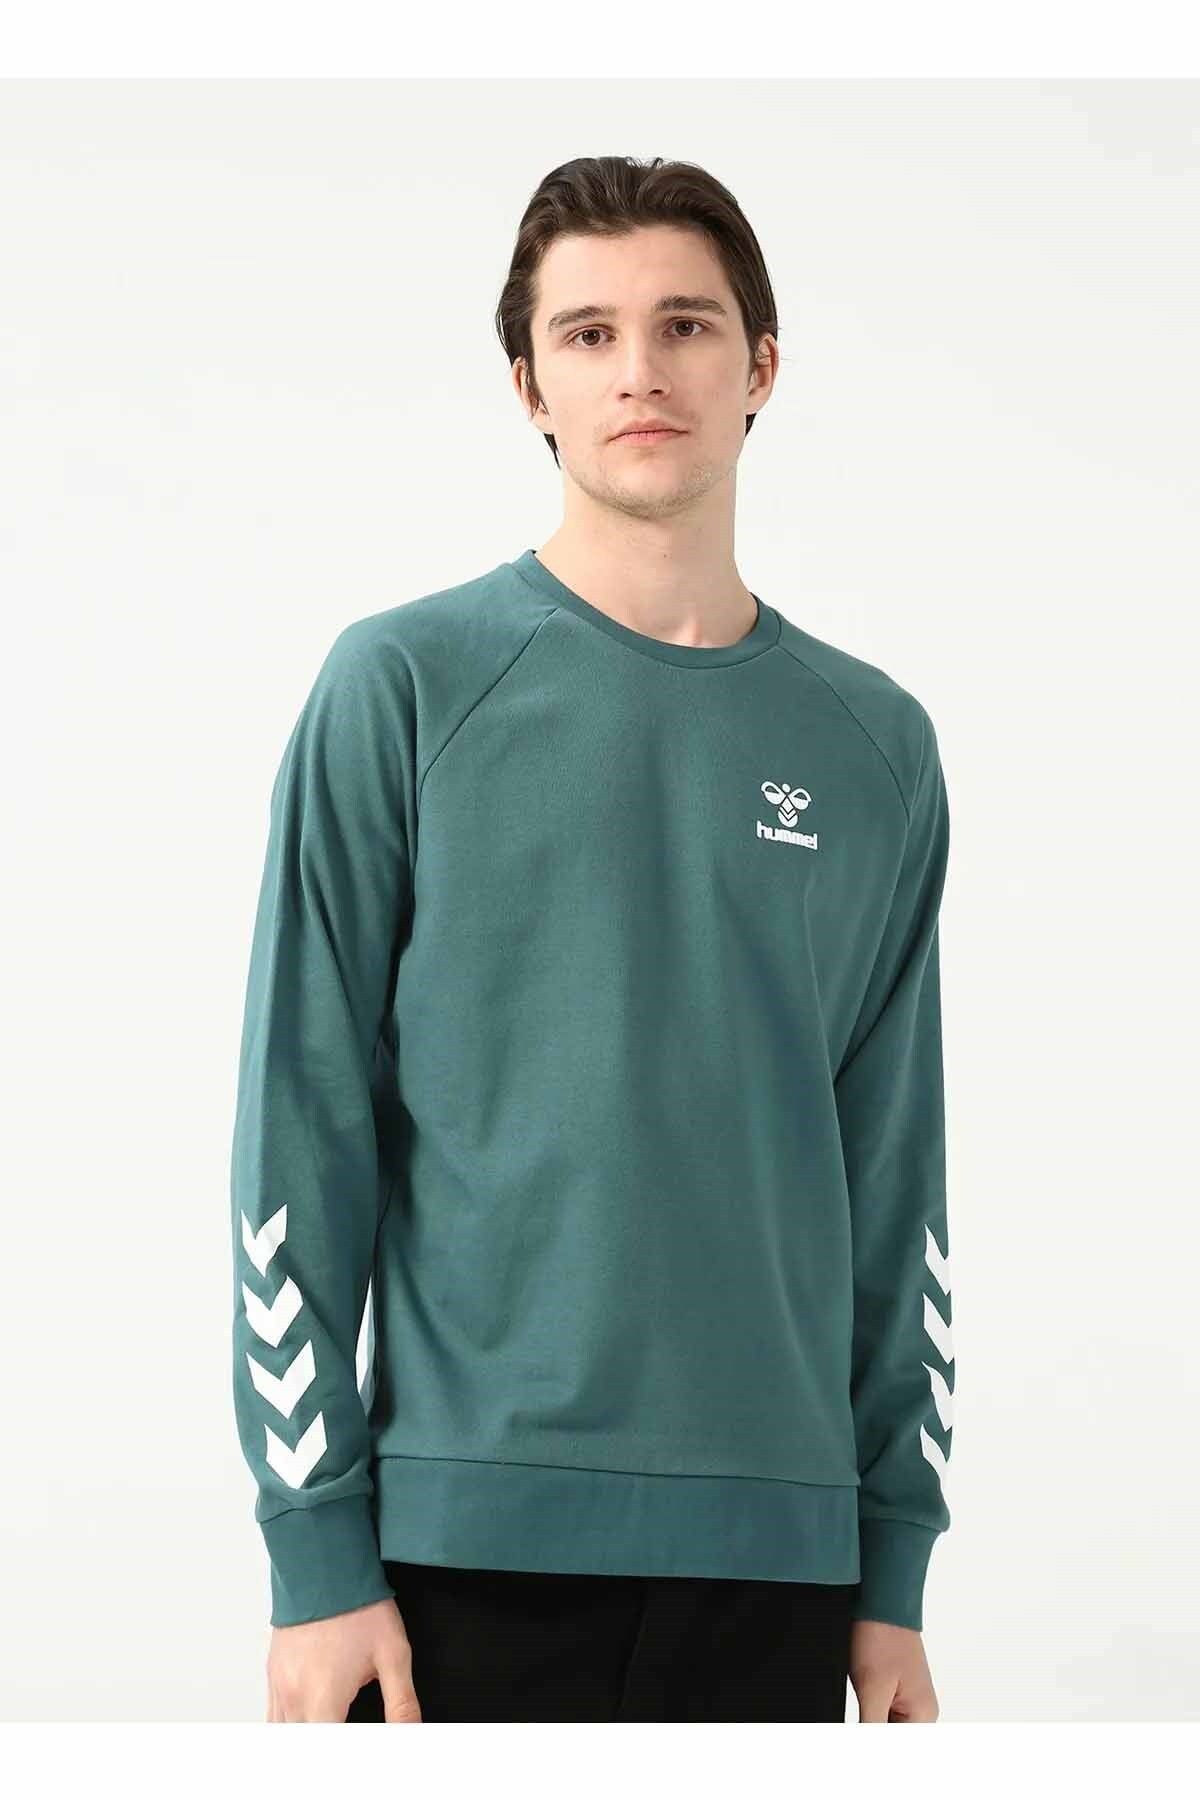 hummel T-ısam 2.0 Sweatshirt Erkek Sweatshirt 921455-1016dark Green